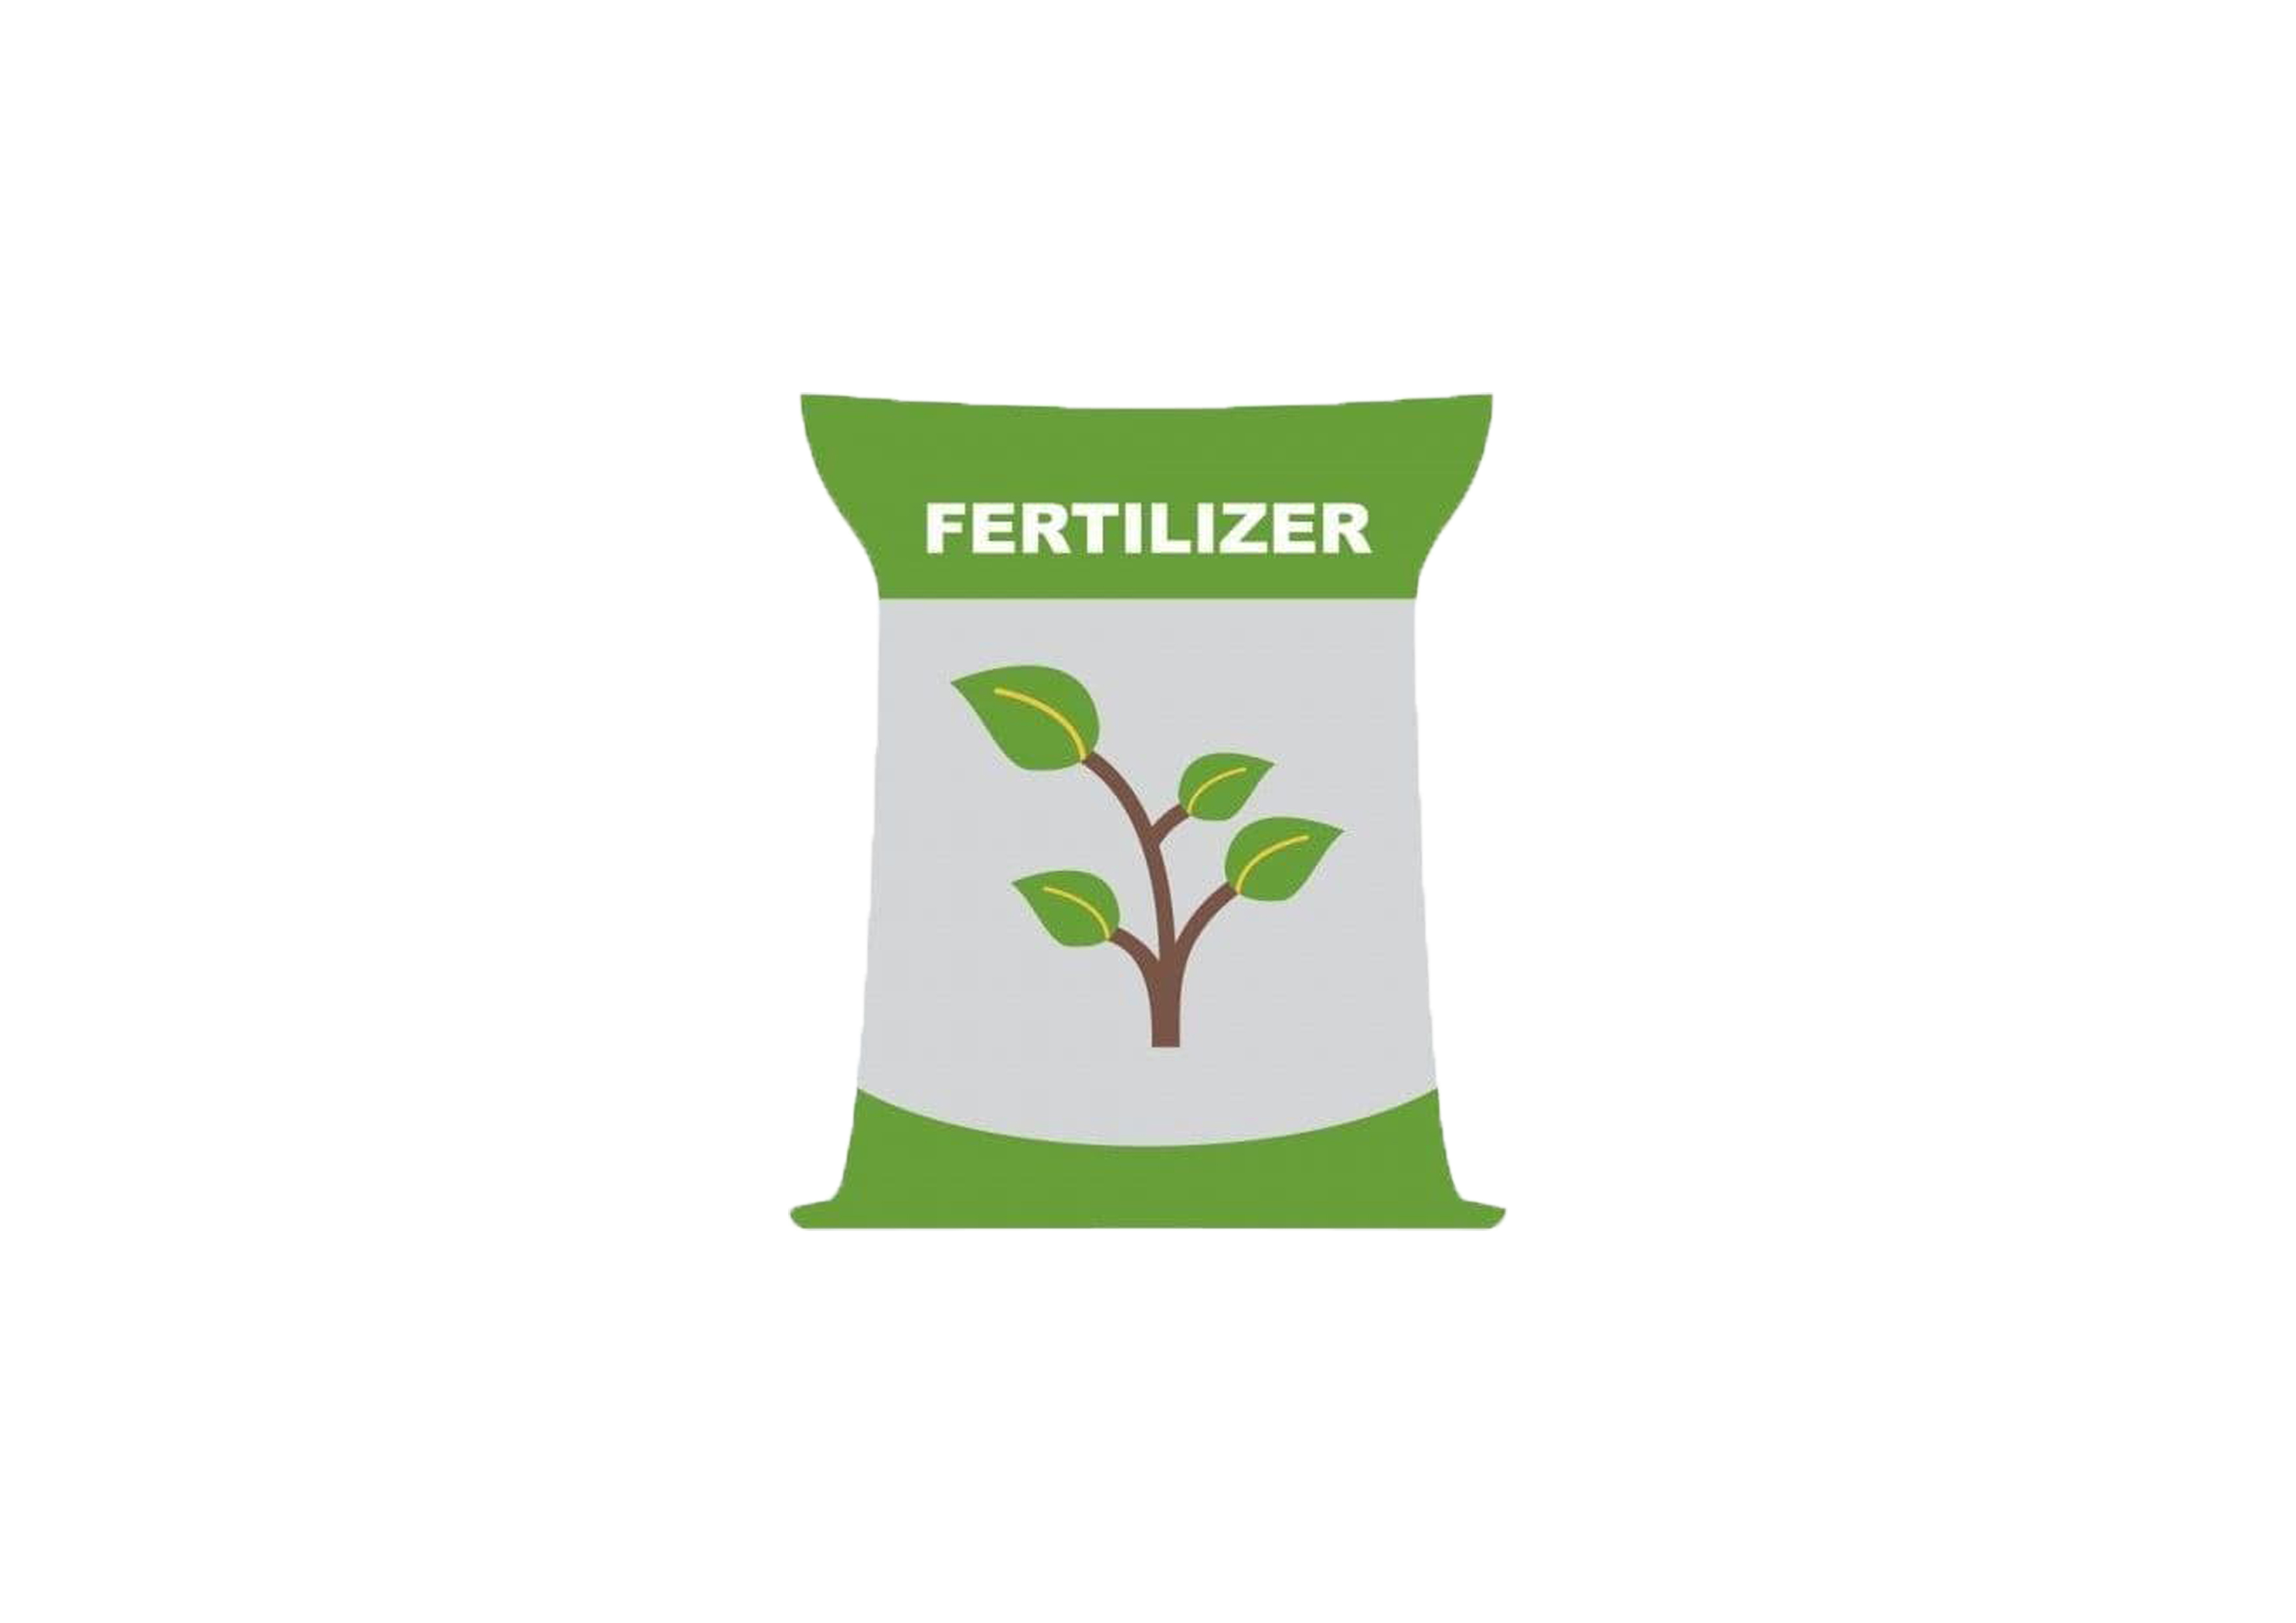 Granular and sulfate fertilizers